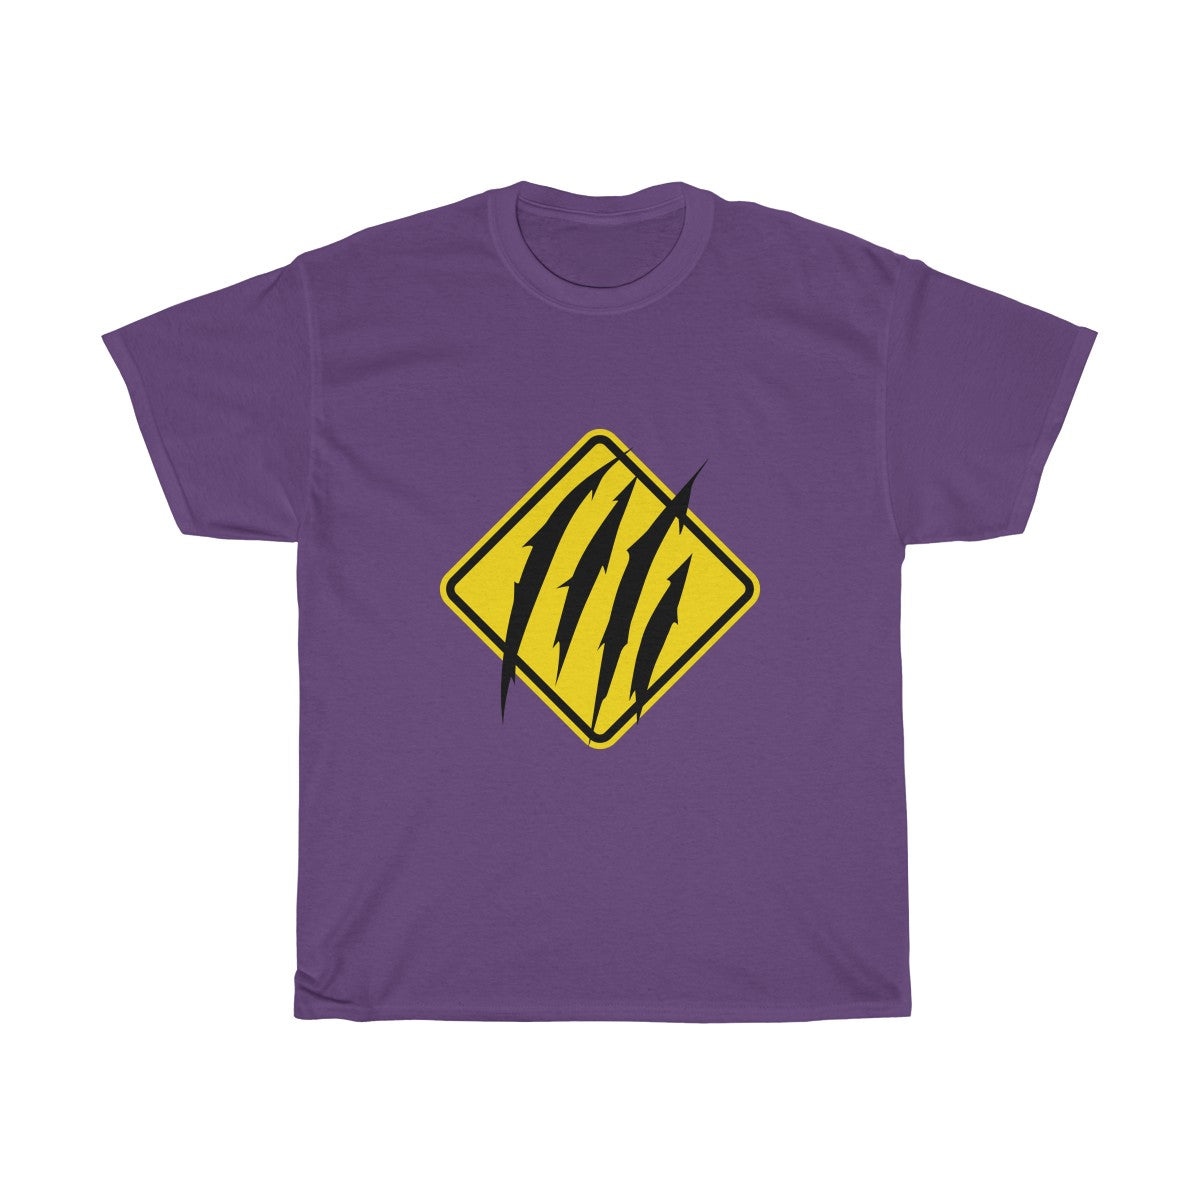 Scratch Warning - T-Shirt T-Shirt Wexon Purple S 